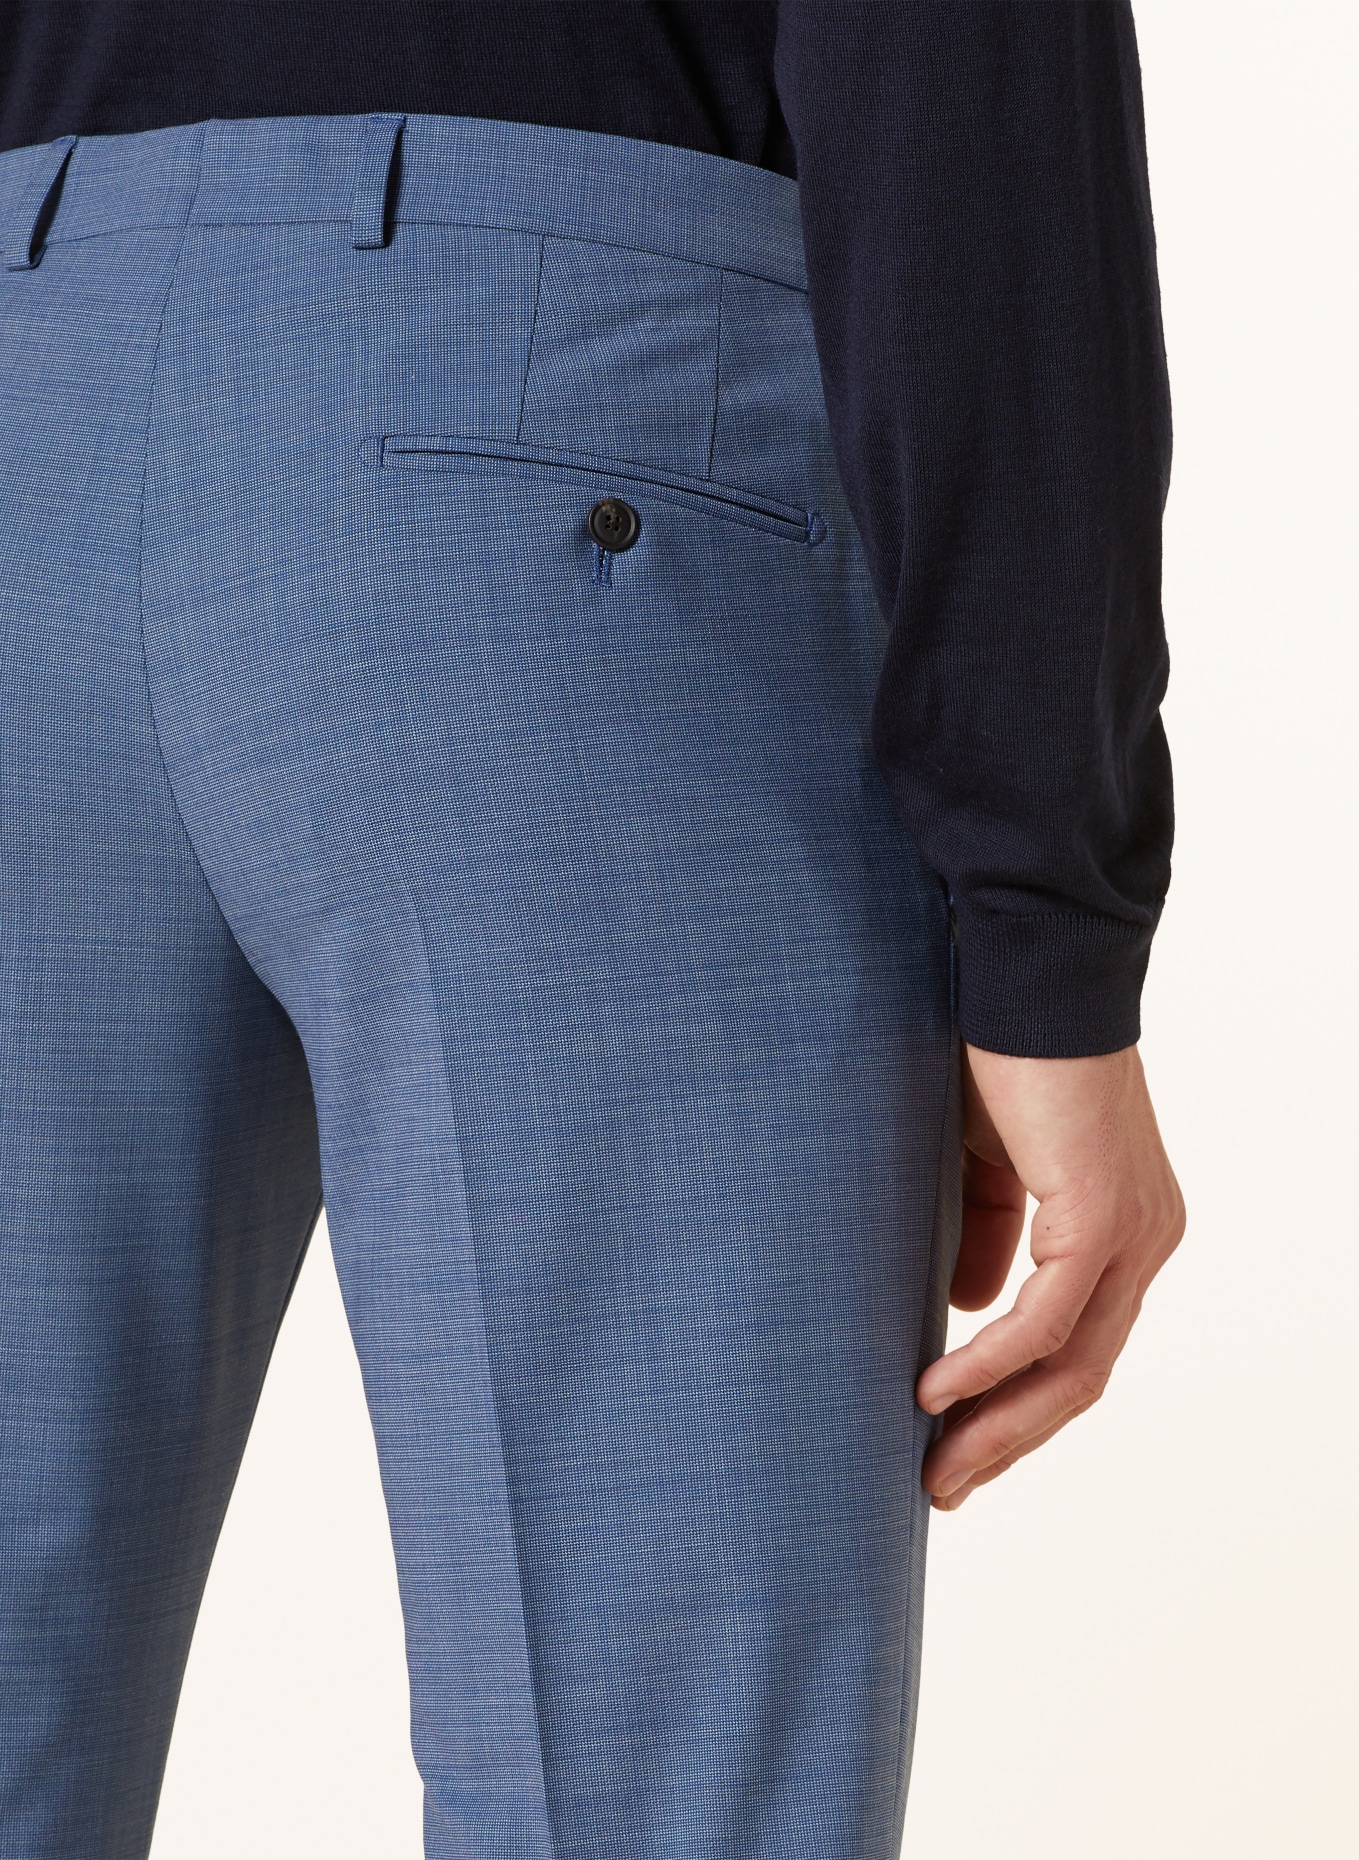 JOOP! Anzug HERBY BLAYR Slim Fit, Farbe: 440 TurquoiseAqua              440 (Bild 7)